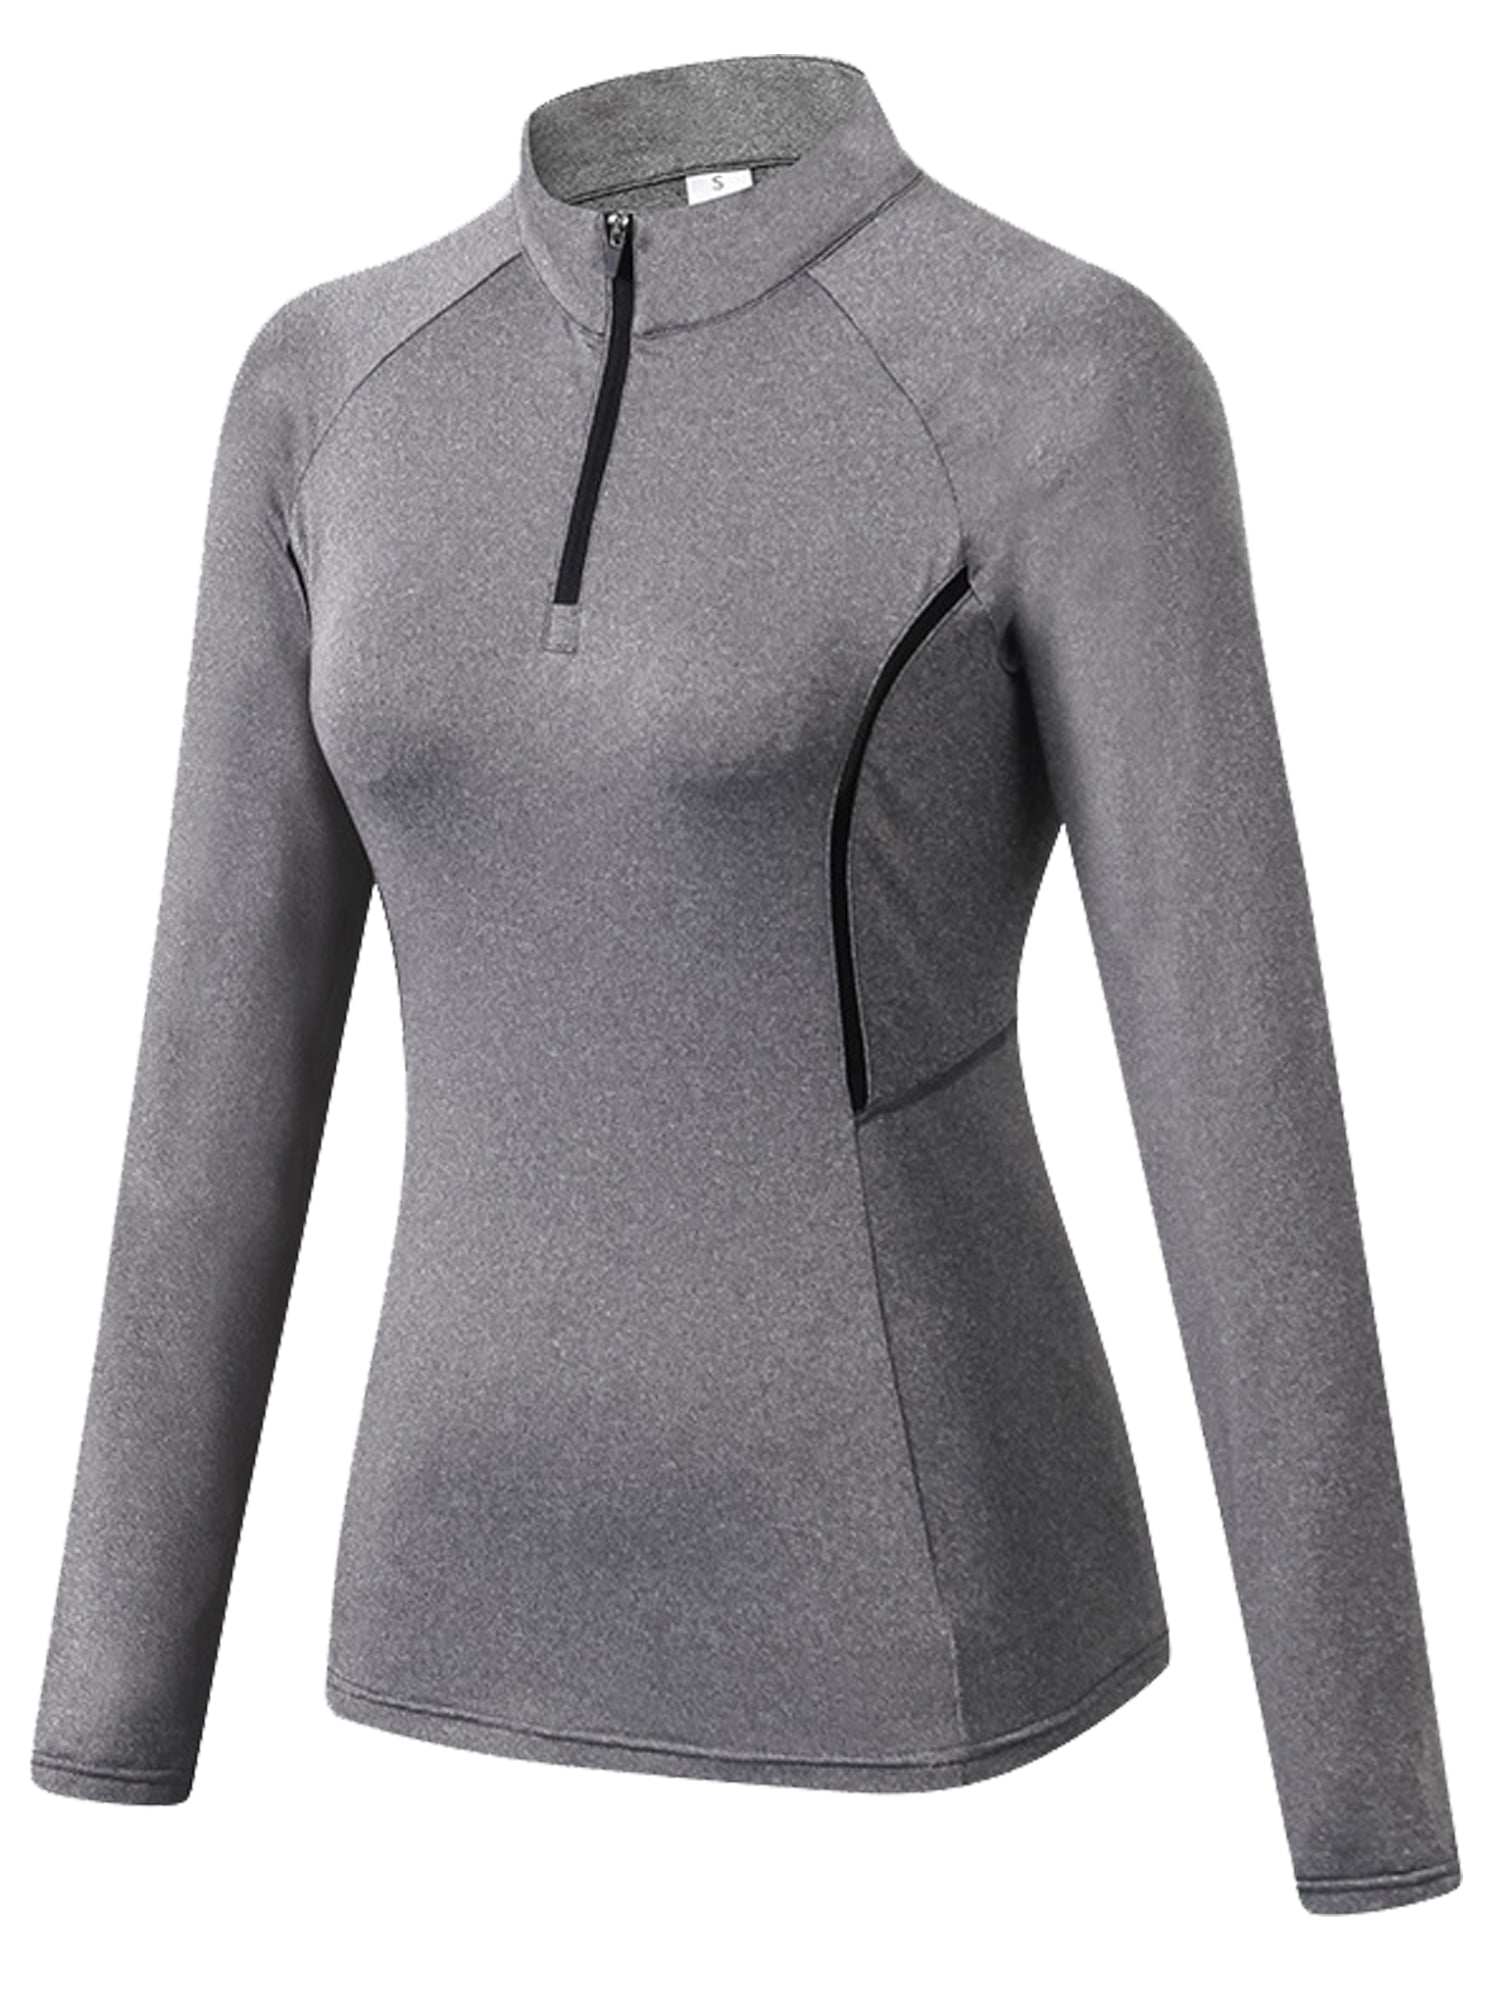 Womens Athletic 1/4 Zip Mock Compression Shirt Running Yoga Base Layer Thumbhole 